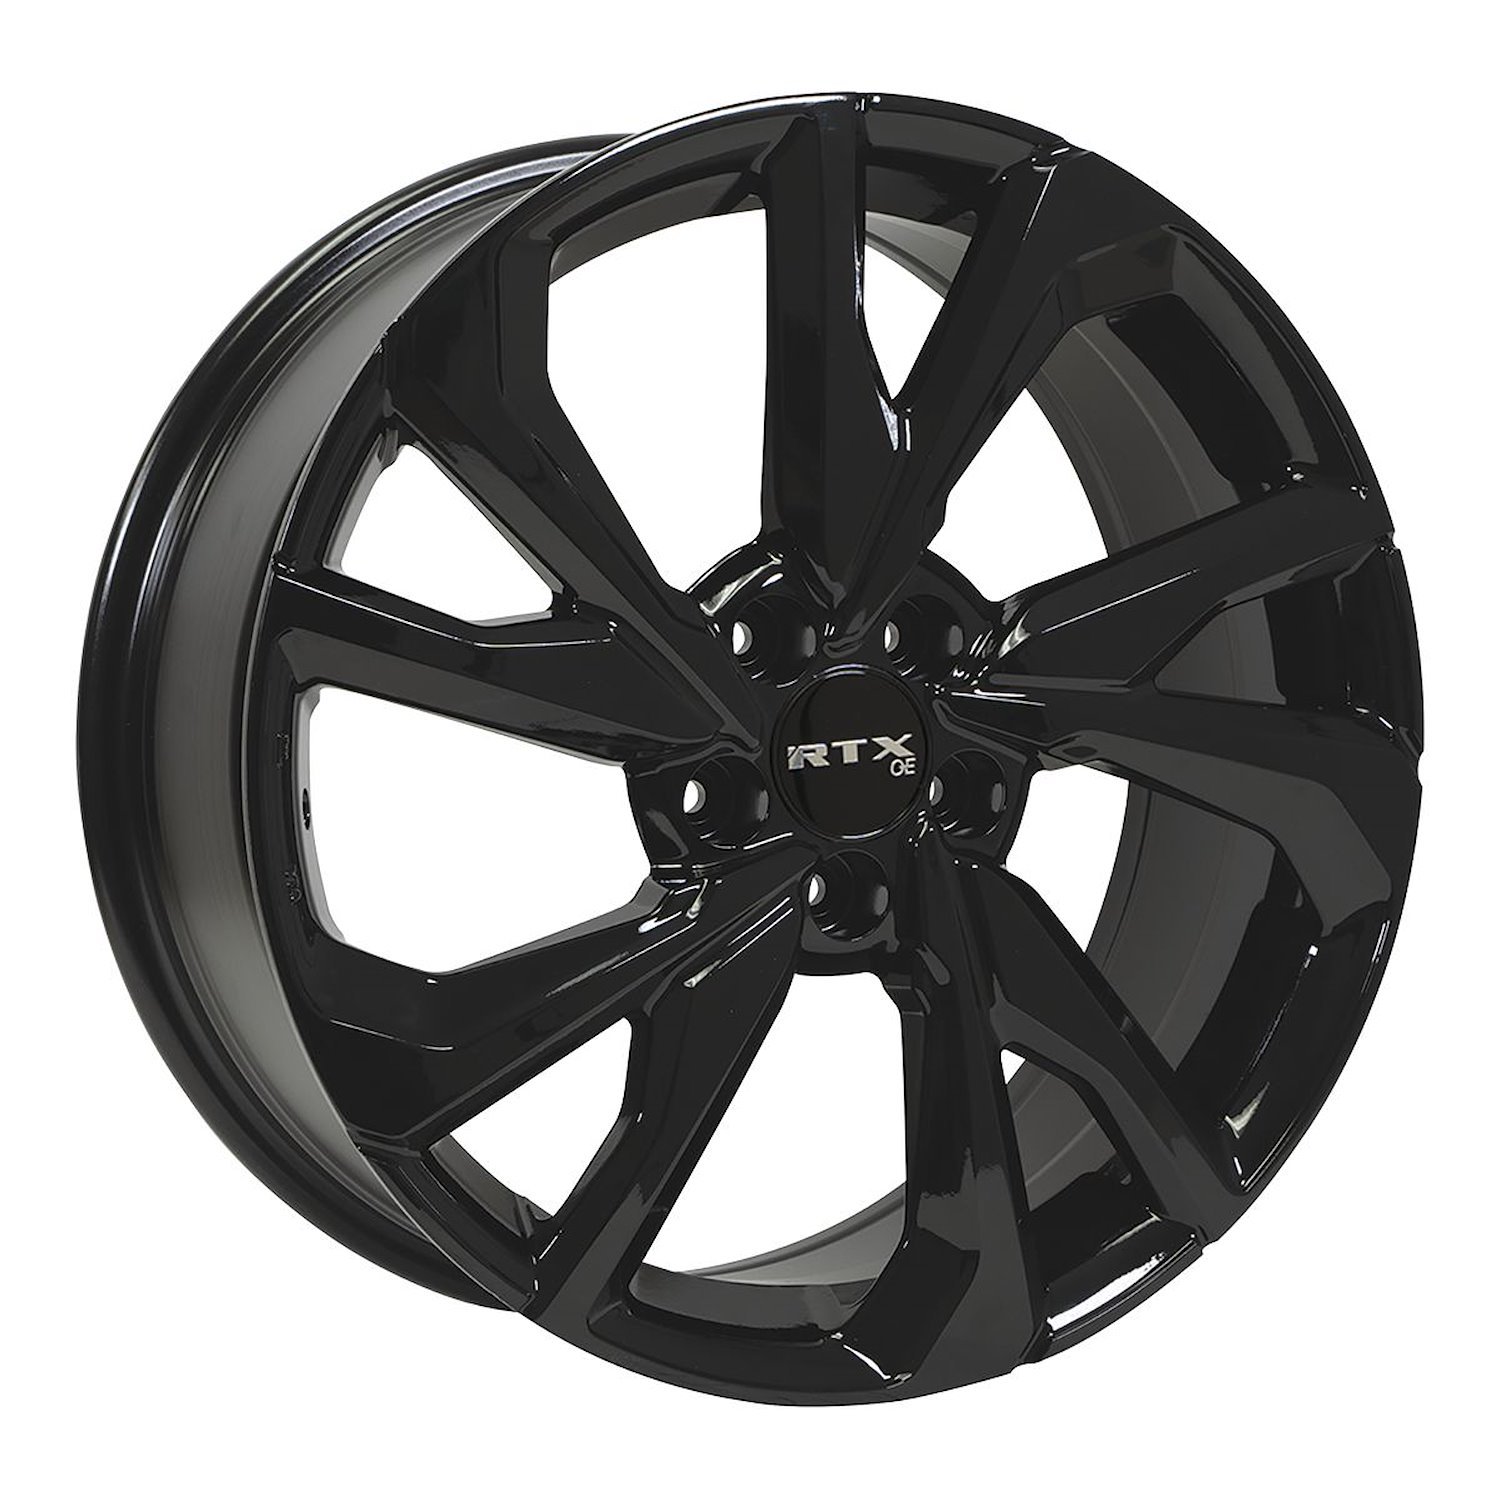 082235 OE-Series Nikko Wheel [Size: 18" x 8"] Gloss Black Finish